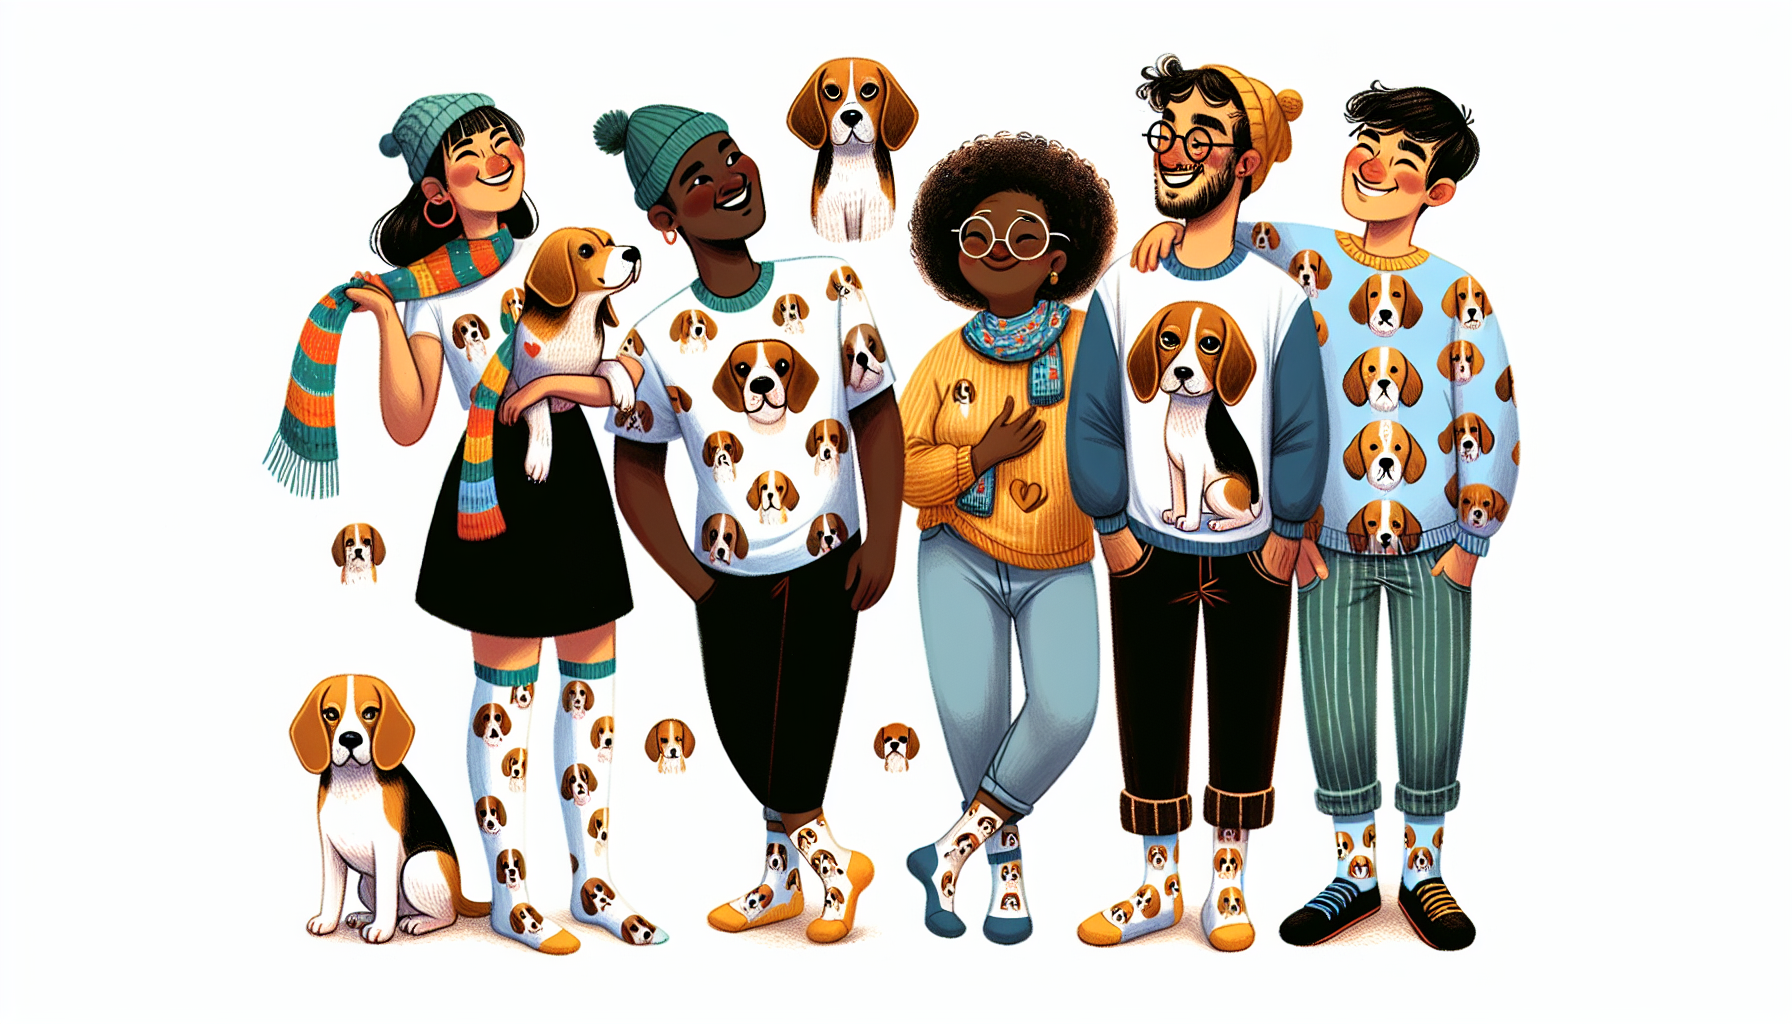 Beagle-themed clothings